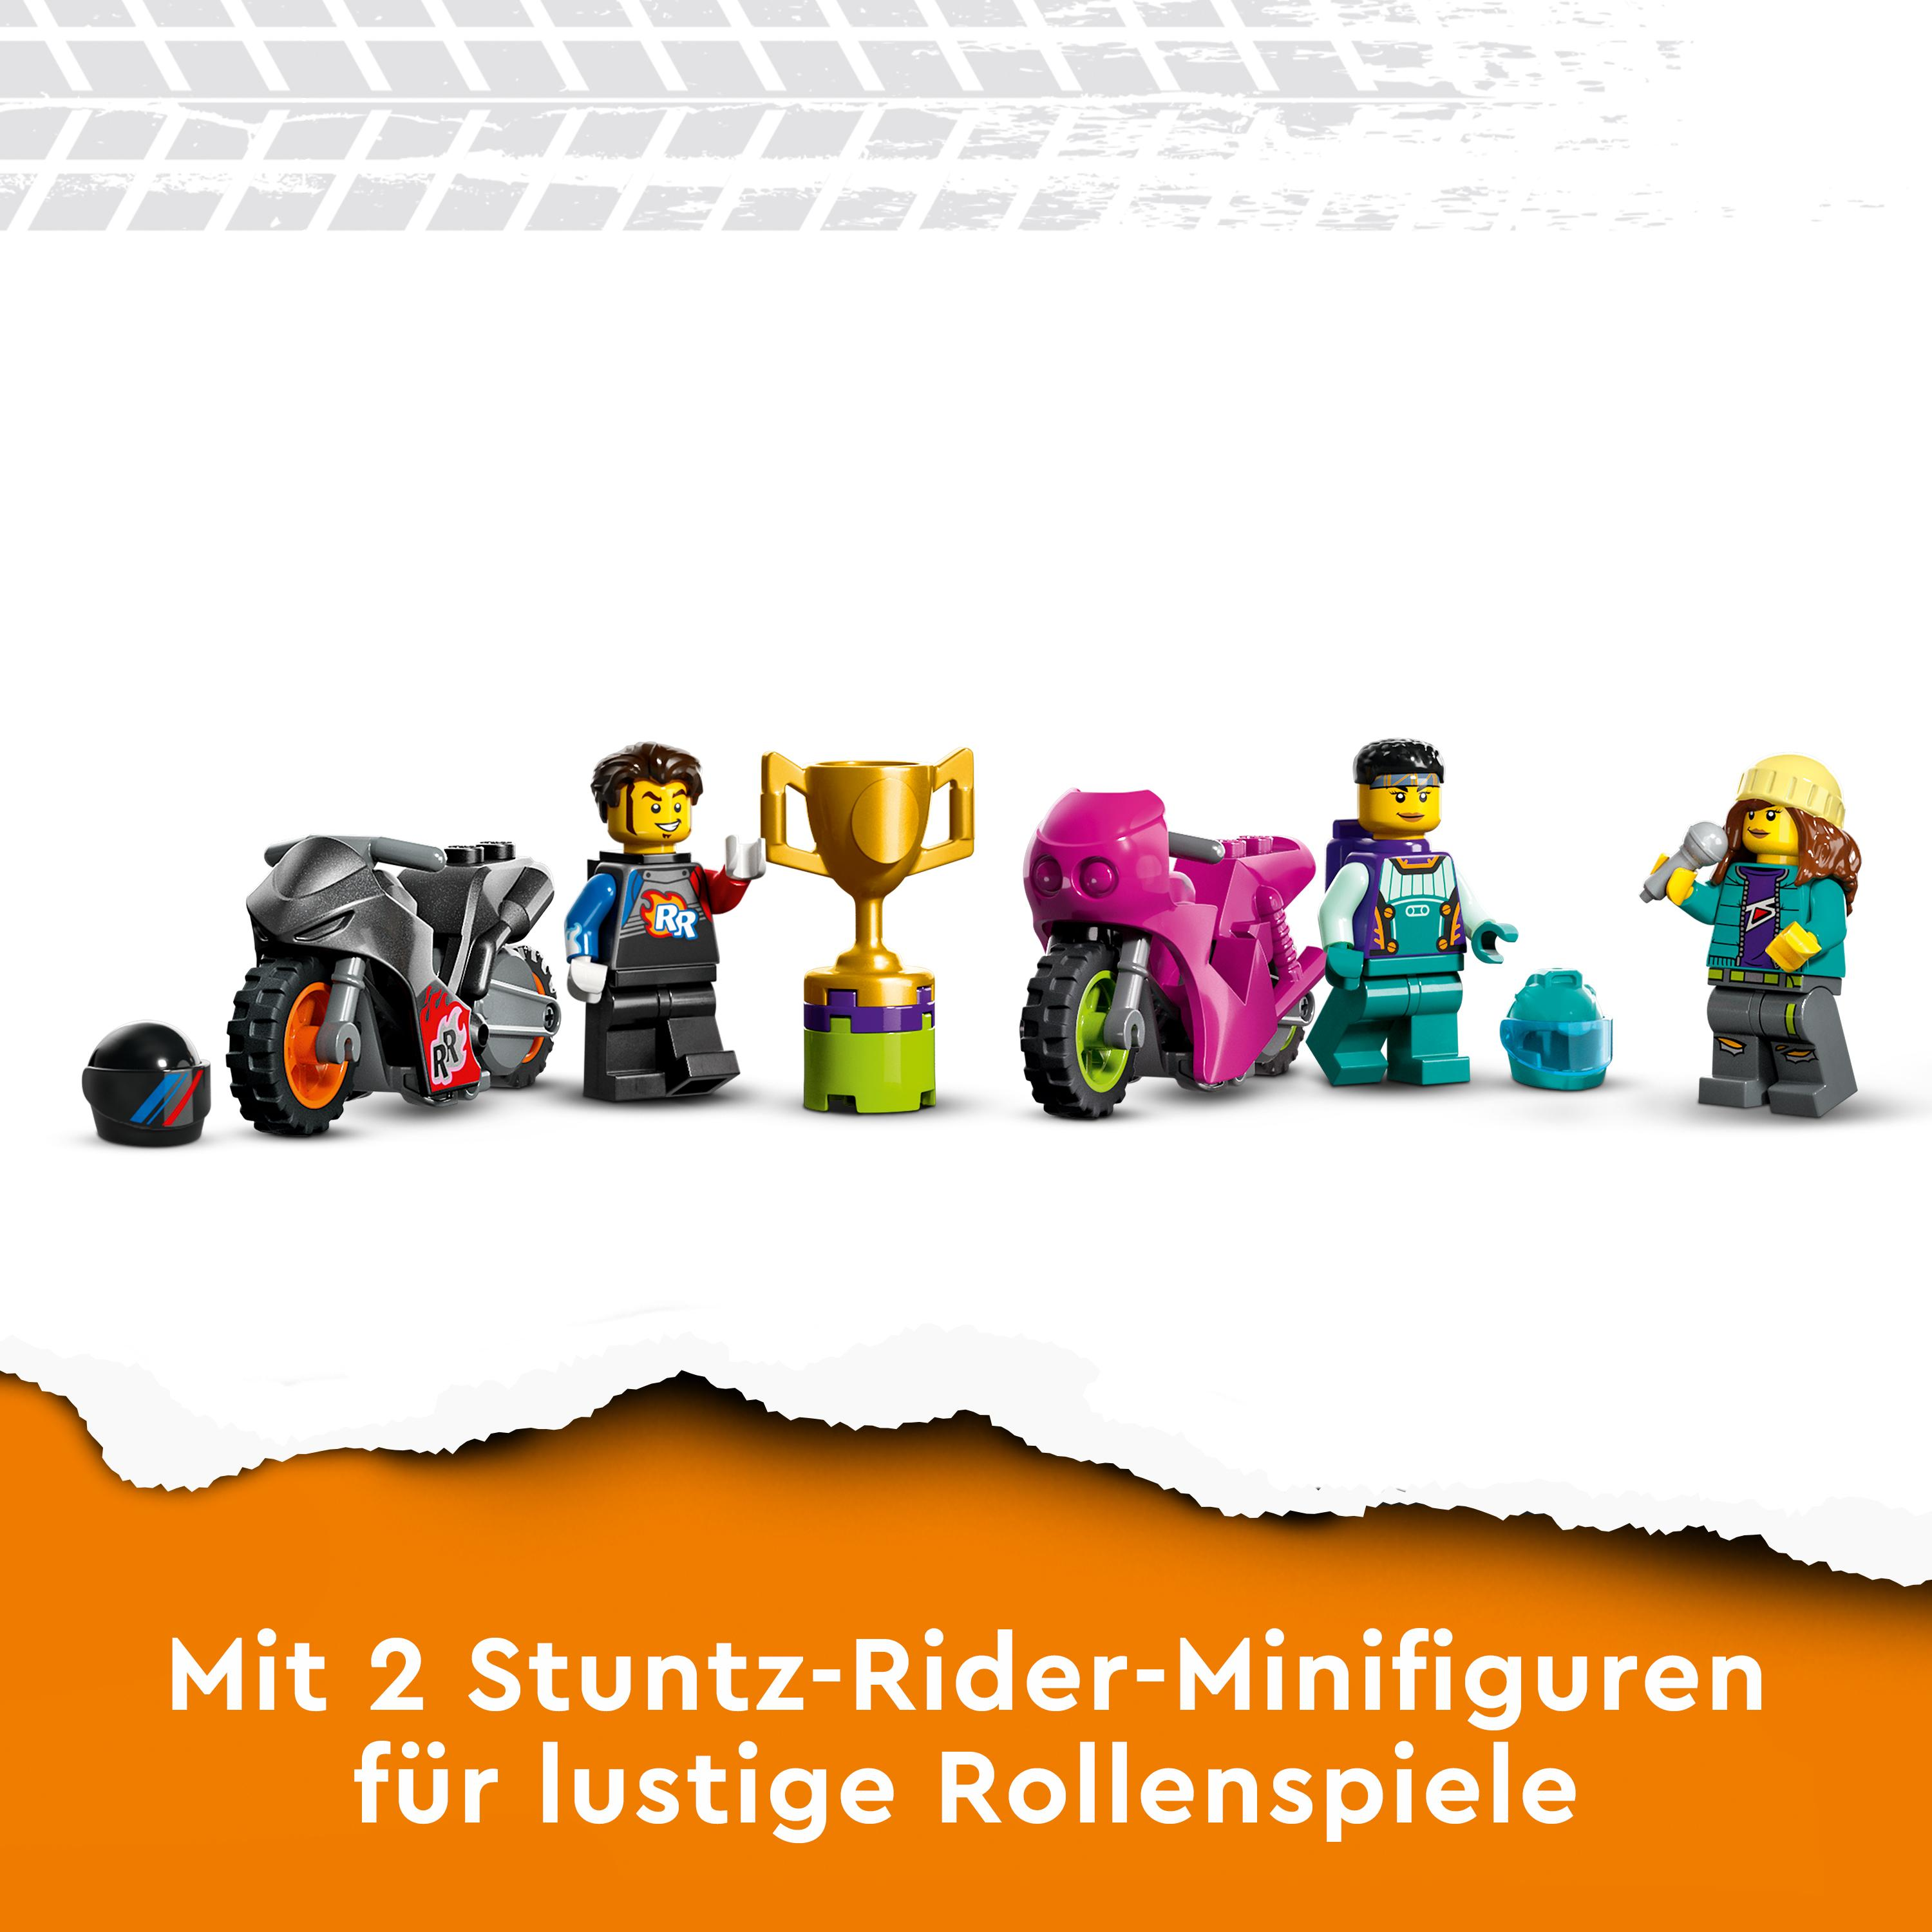 LEGO City Stuntz Bausatz, Mehrfarbig Stuntfahrer-Challenge Ultimative 60361